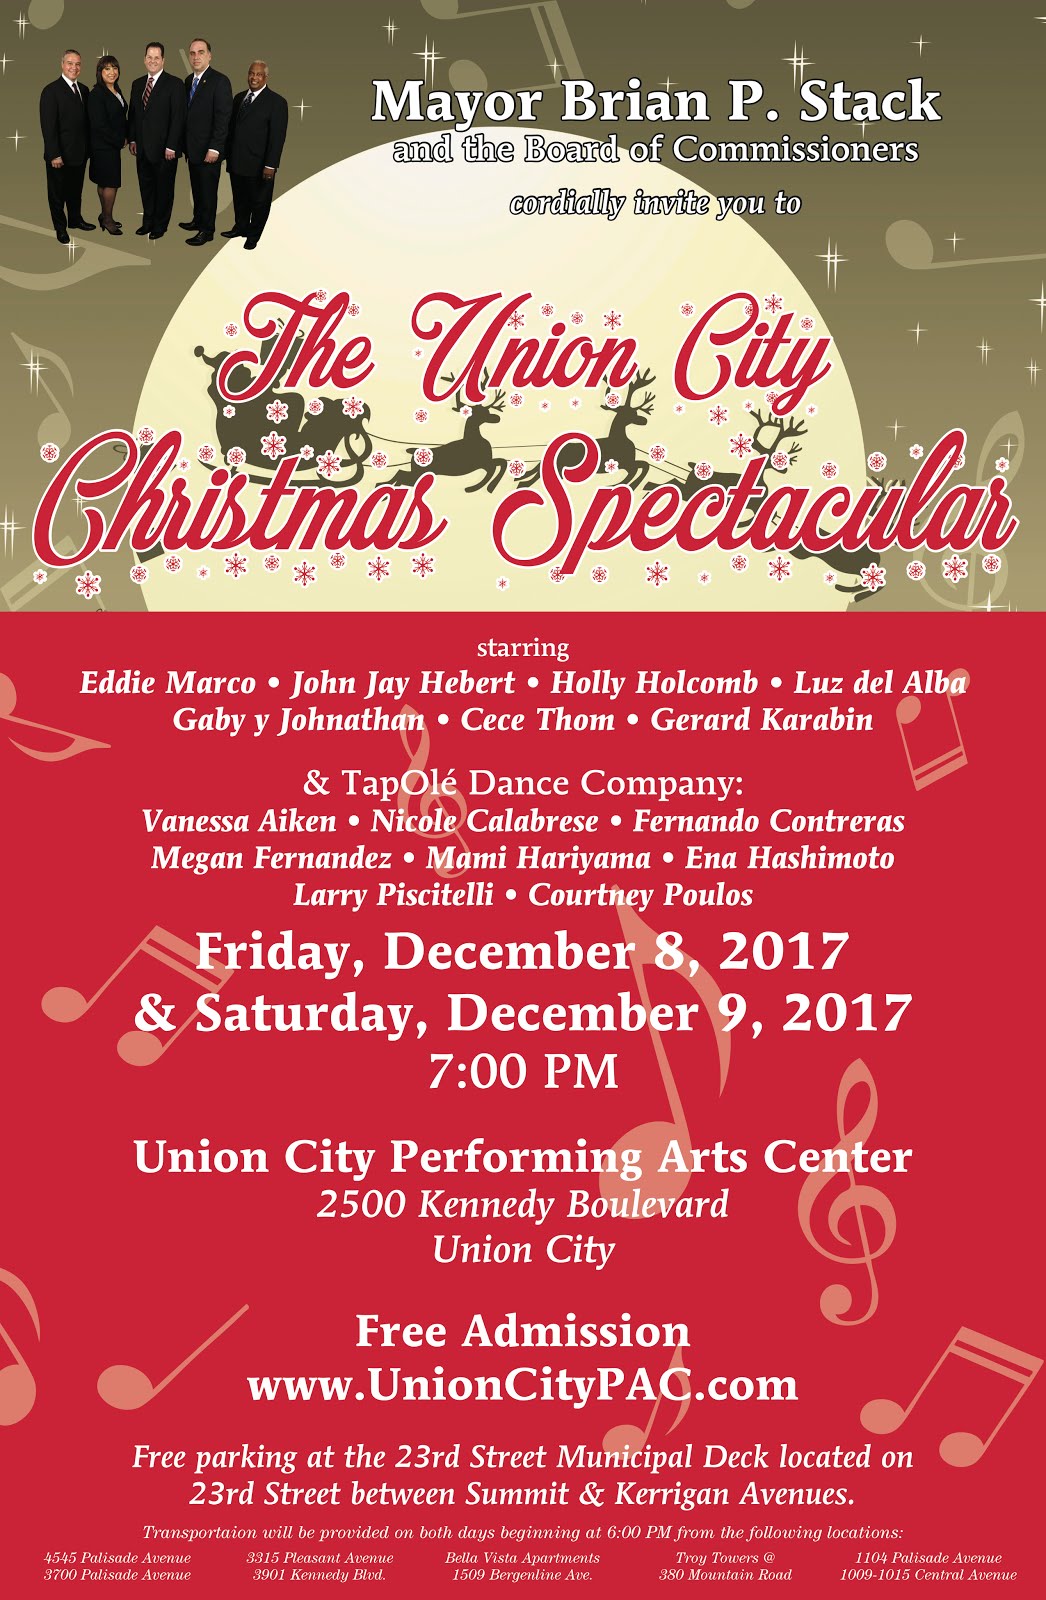 The Union City Christmas Spectacular